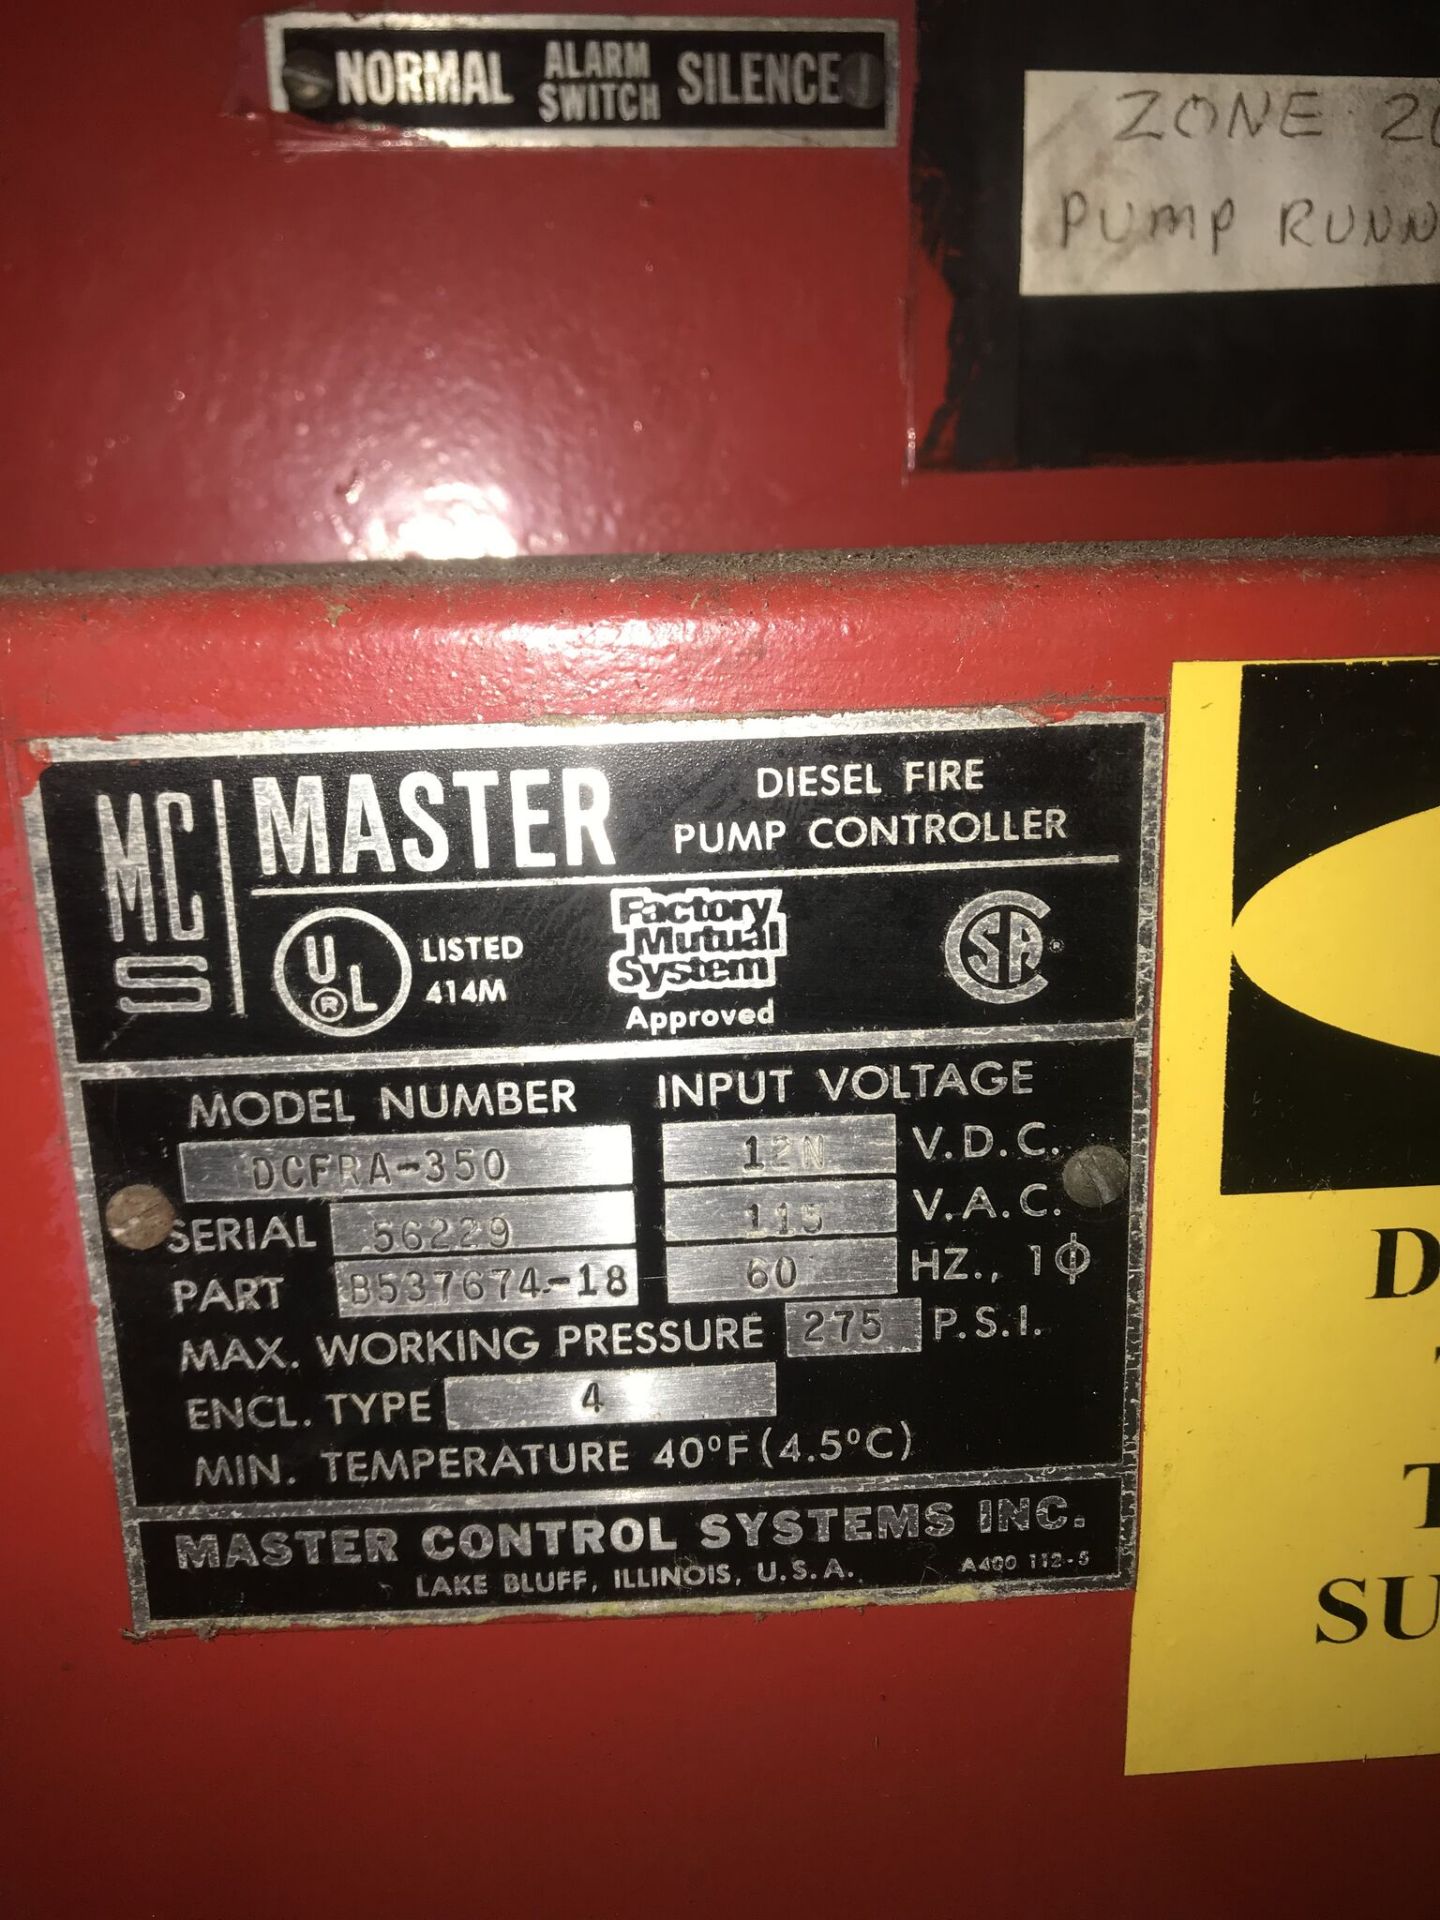 Peerless Pump Fire Water Pump & System, Model #6AEF146, 1500 GPM, PSI 47.9, McMaster Diesel Fire - Image 7 of 7